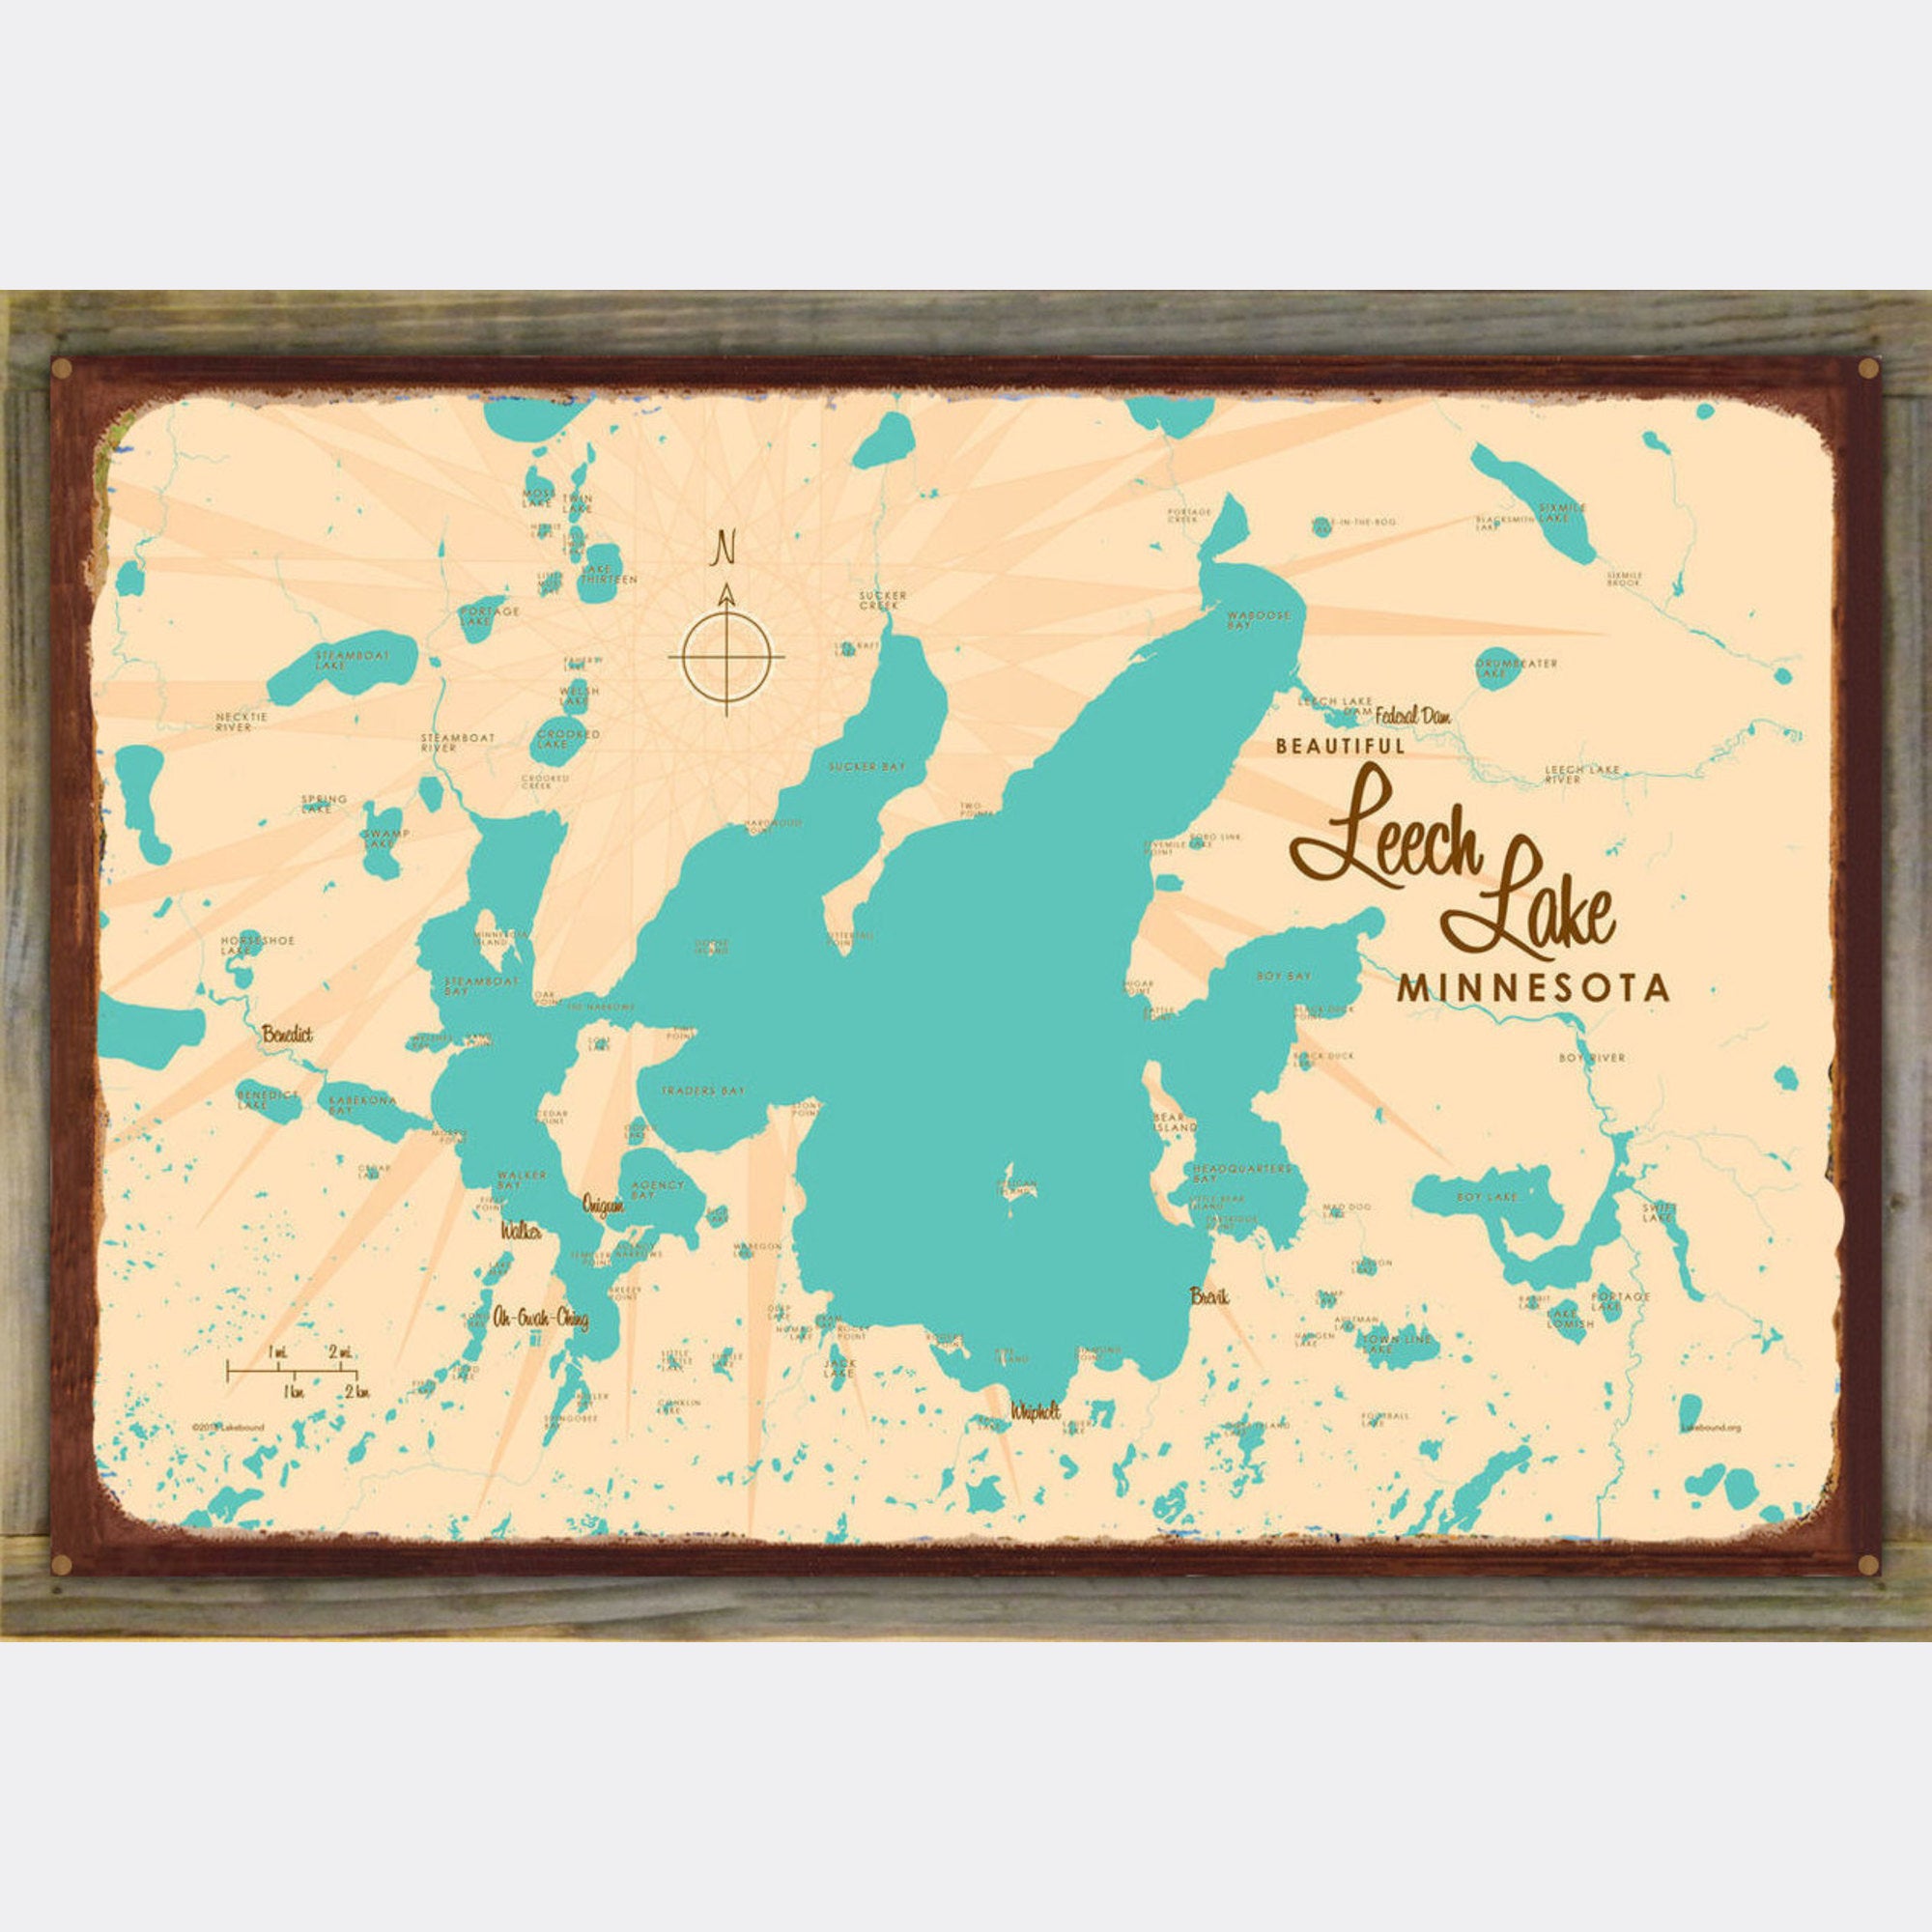 Leech Lake Minnesota, Wood-Mounted Rustic Metal Sign Map Art